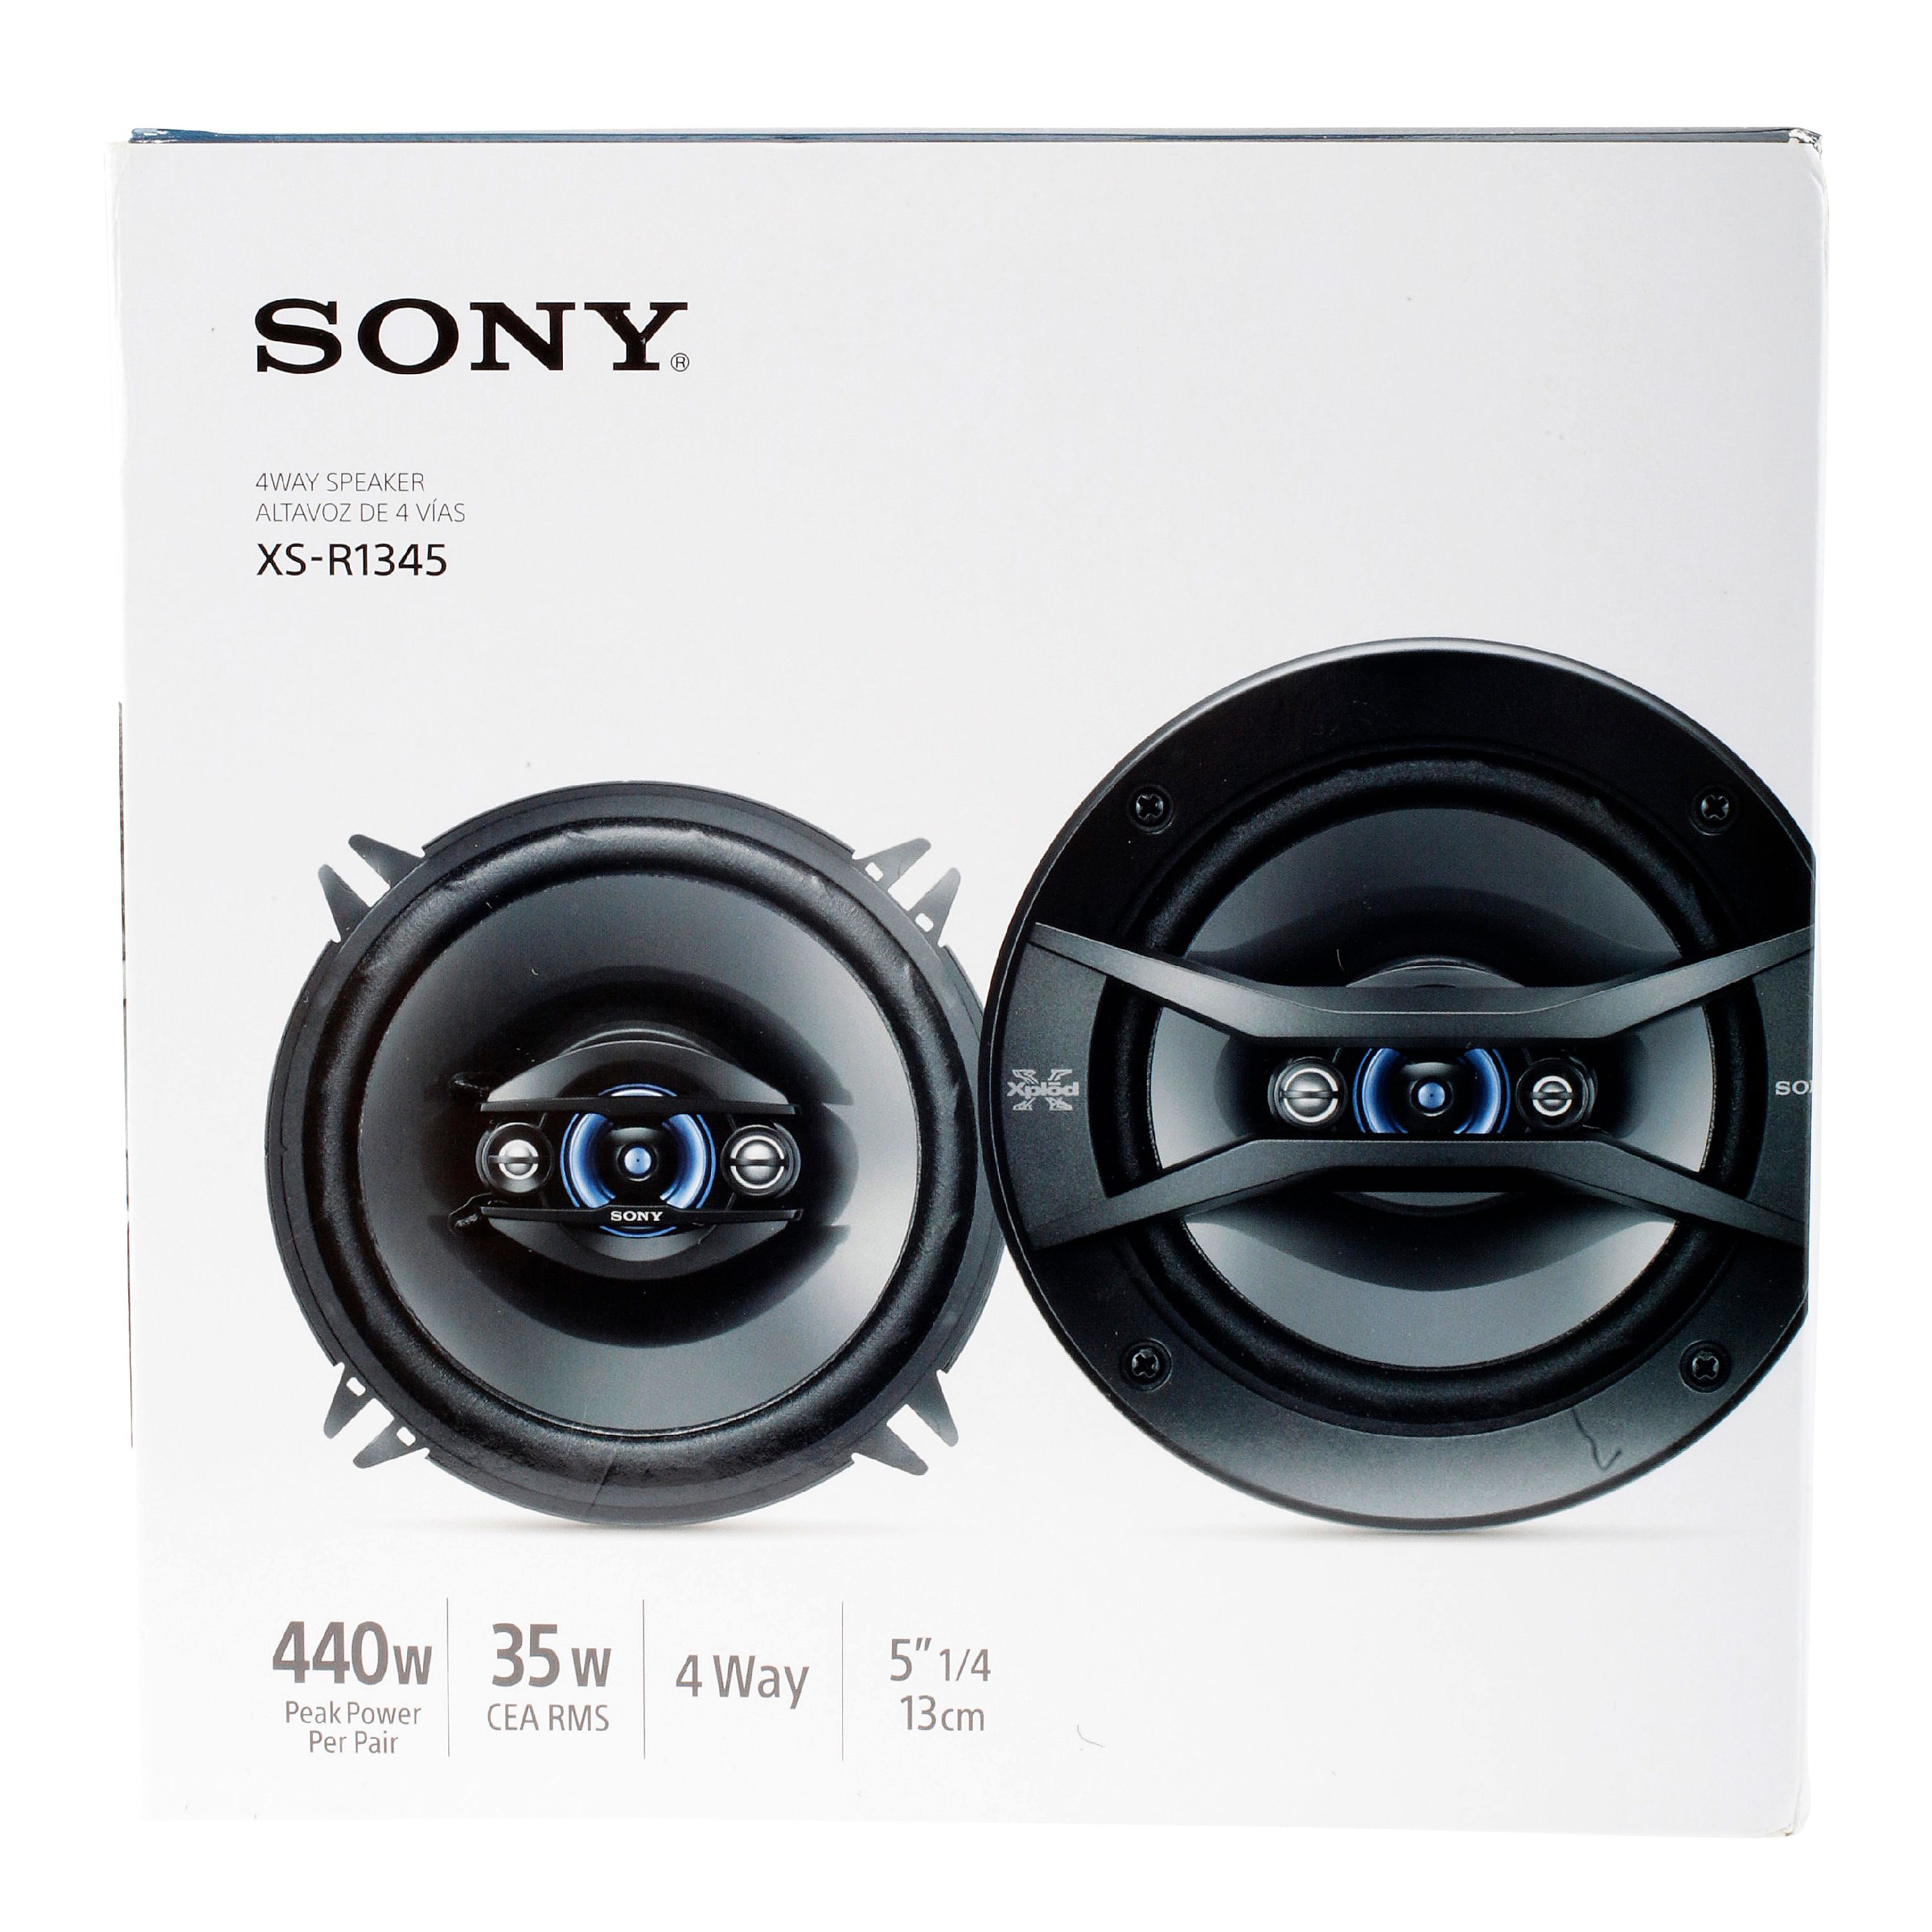 Sony XS-R1345 5-1/4" 4-Way Car Speaker - image 1 of 5